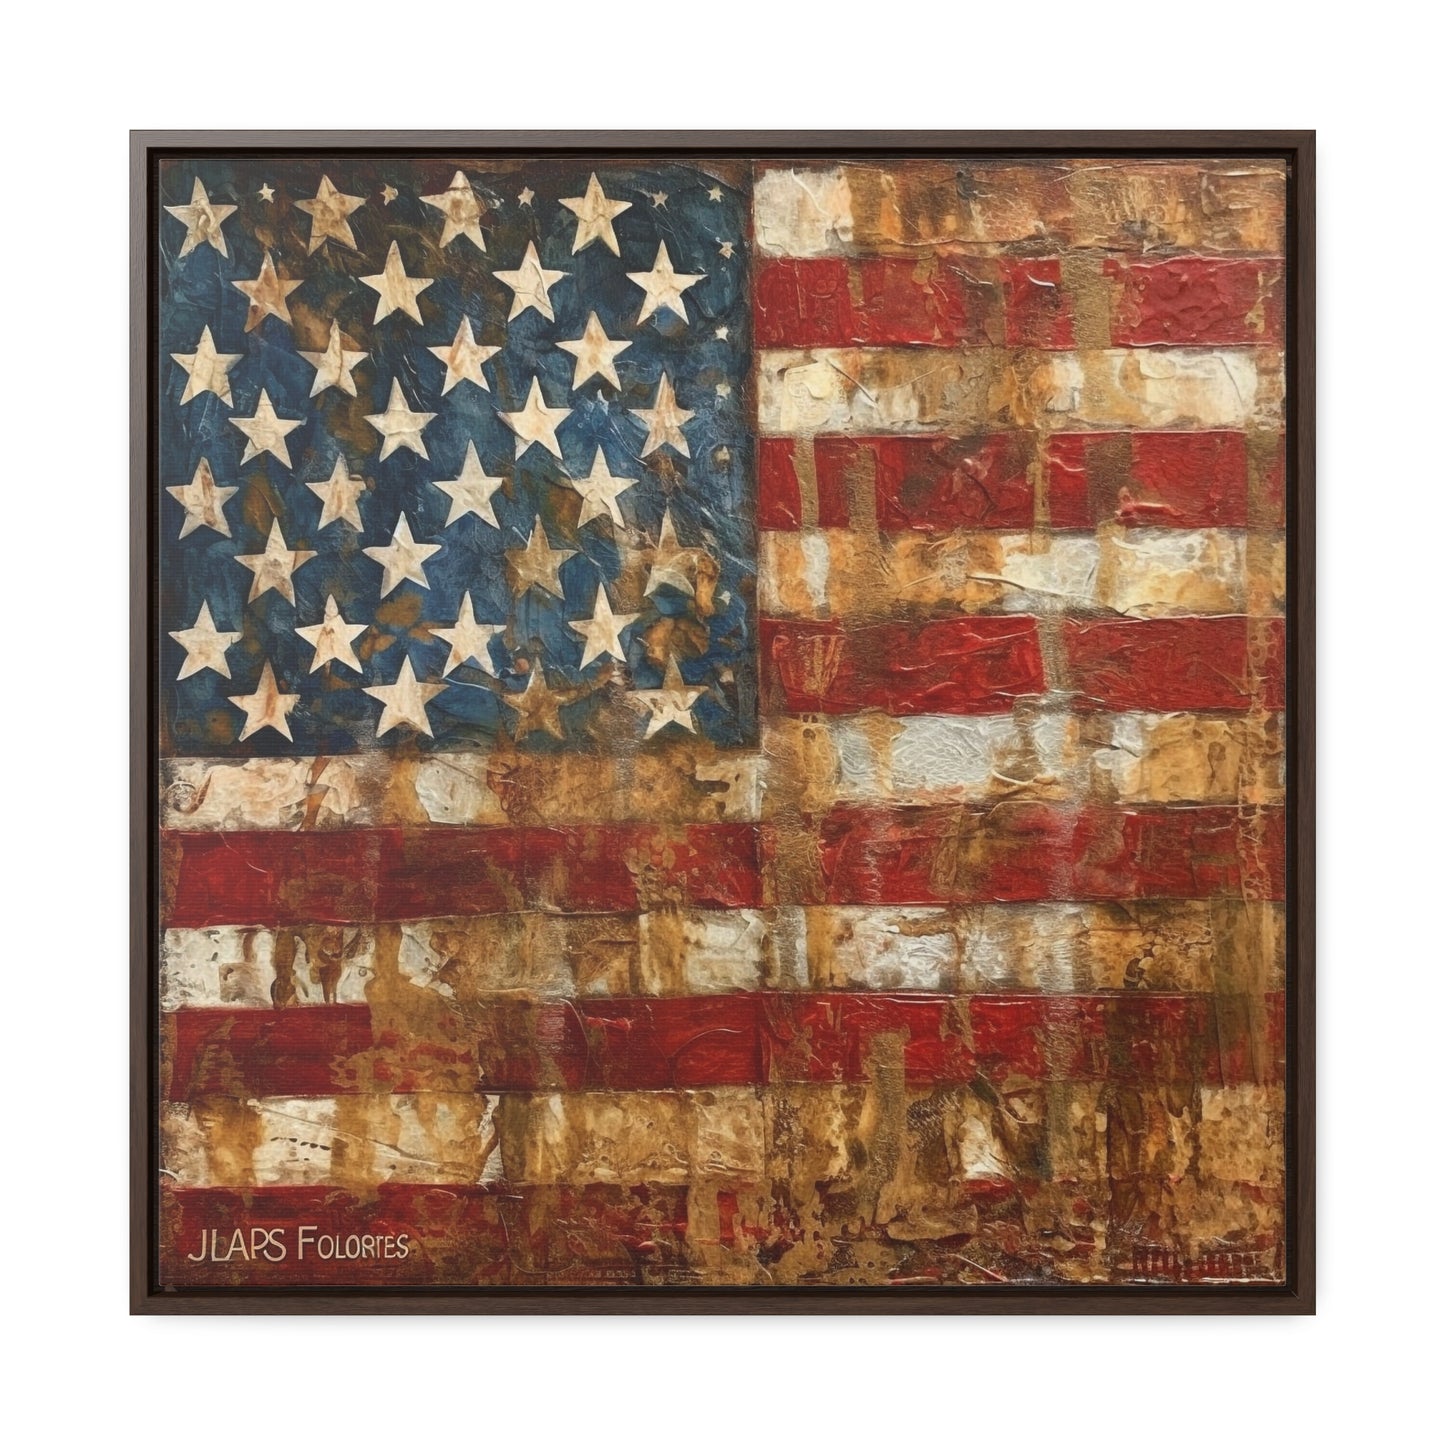 USA 16, Gallery Canvas Wraps, Square Frame